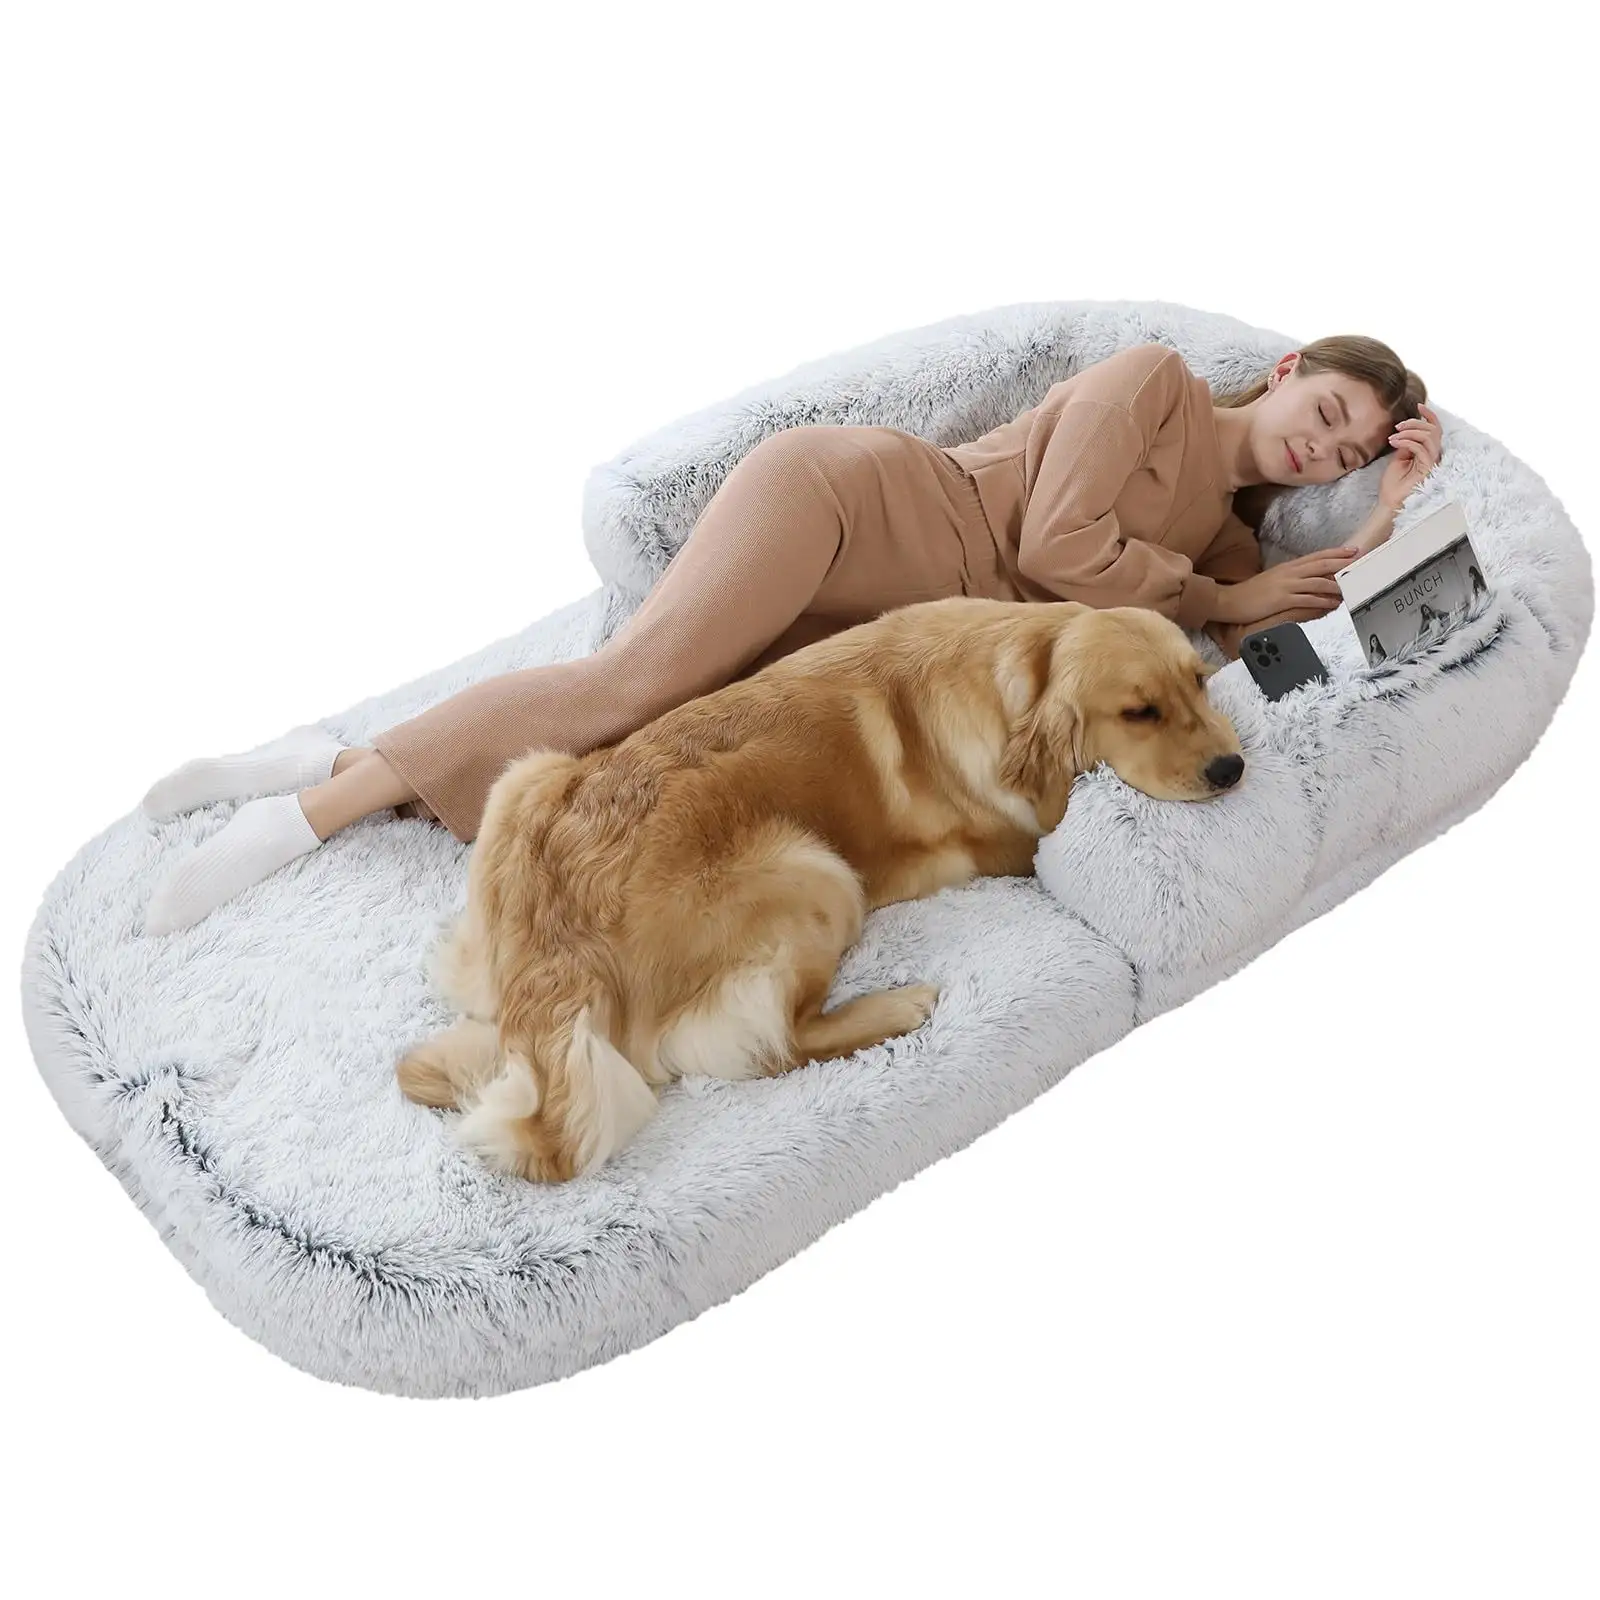 विशाल कुत्ते केनेल ओवरसाइज हटाने योग्य और धोने योग्य फोल्डेबल सोफा विशाल पालतू बिस्तर लोगों को पालतू जानवर